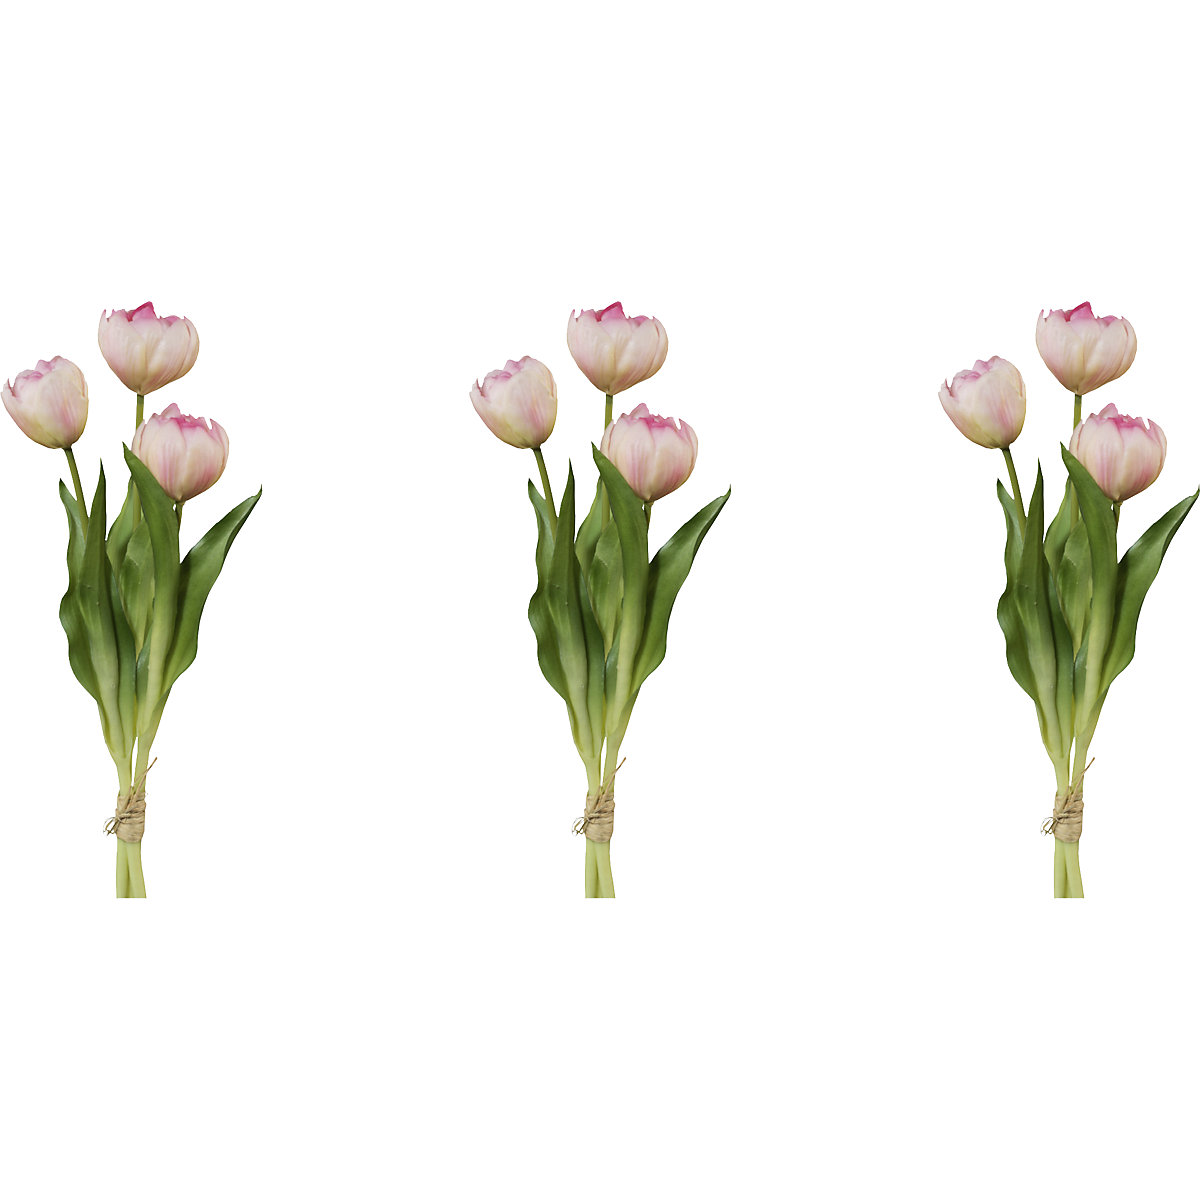 Tulipanes rellenos, real touch, manojo de 3